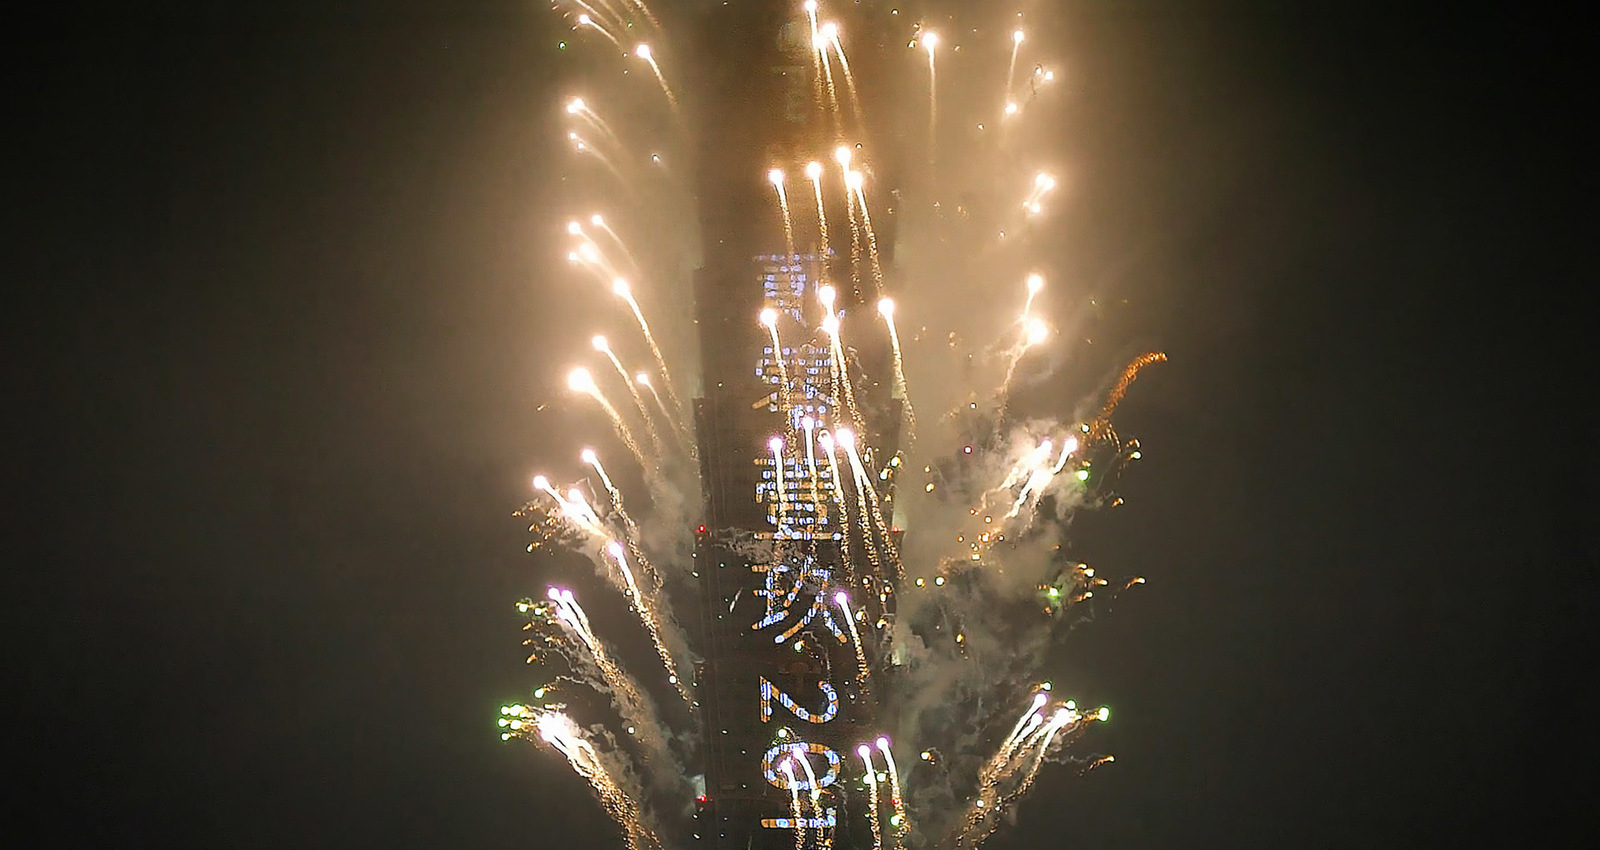 TAIPEI 101 New Year's Eve 2019 Fireworks X Animation Show